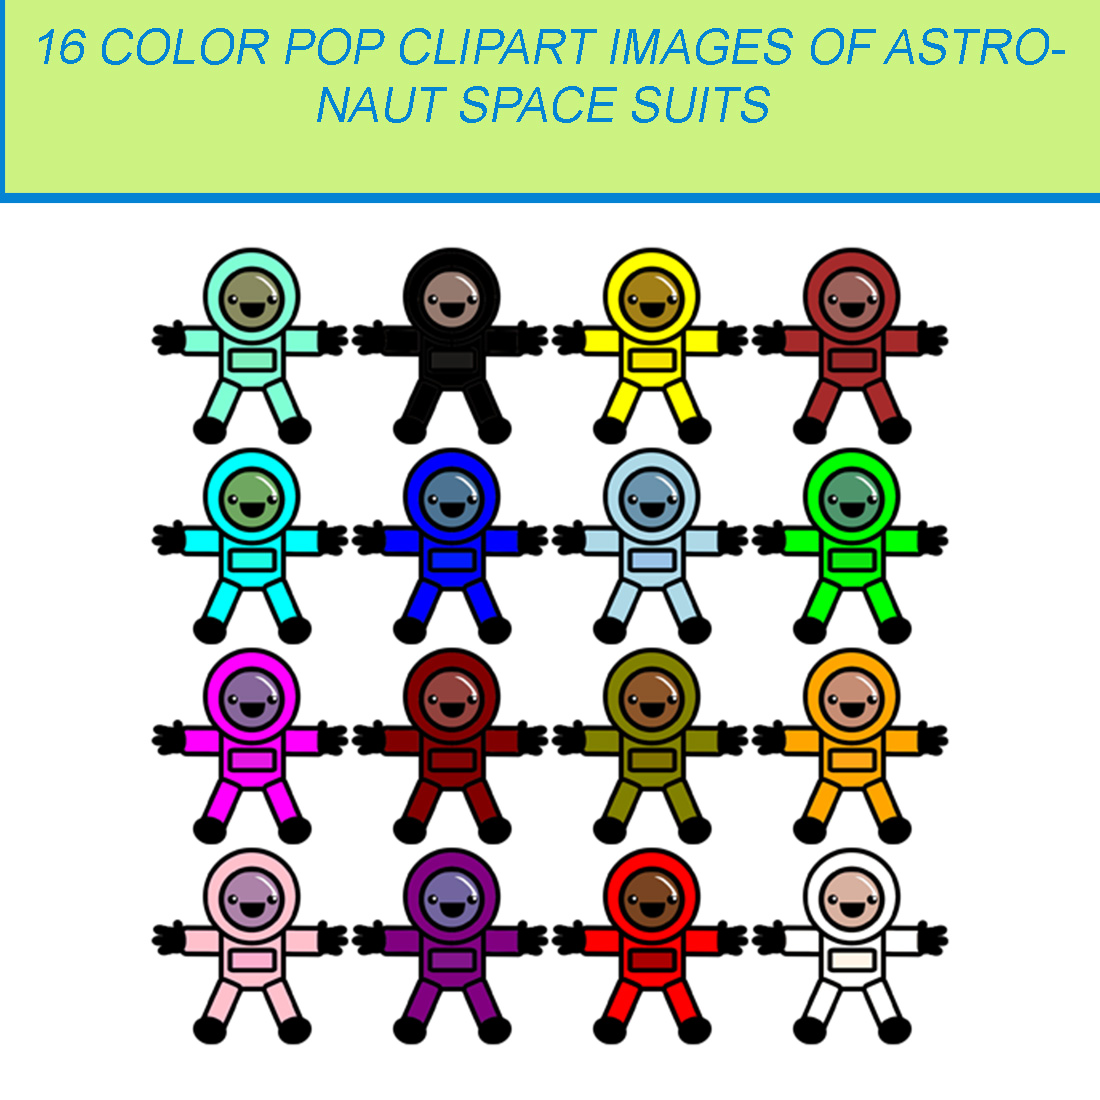 16 COLOR POP CLIPART IMAGES OF ASTRONAUT SPACE SUITS cover image.